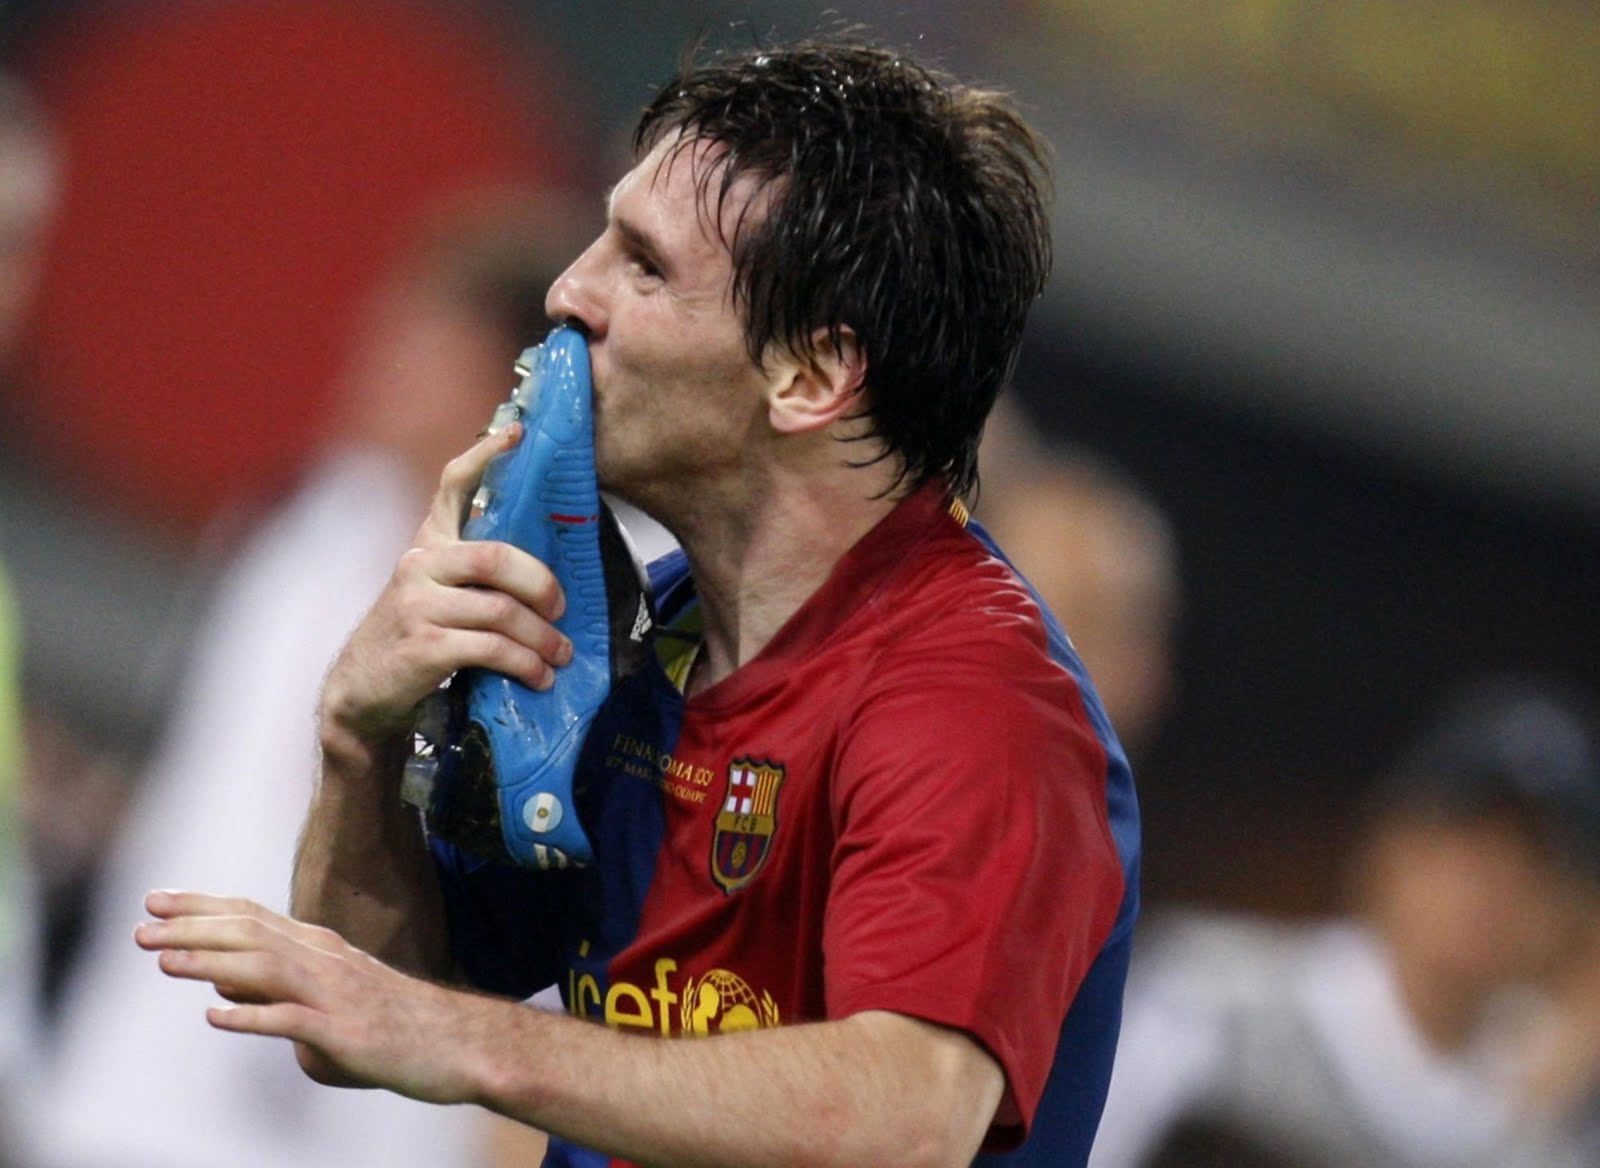 Lionel Messi photo 15 of 22 pics, wallpaper - photo #445818 ...